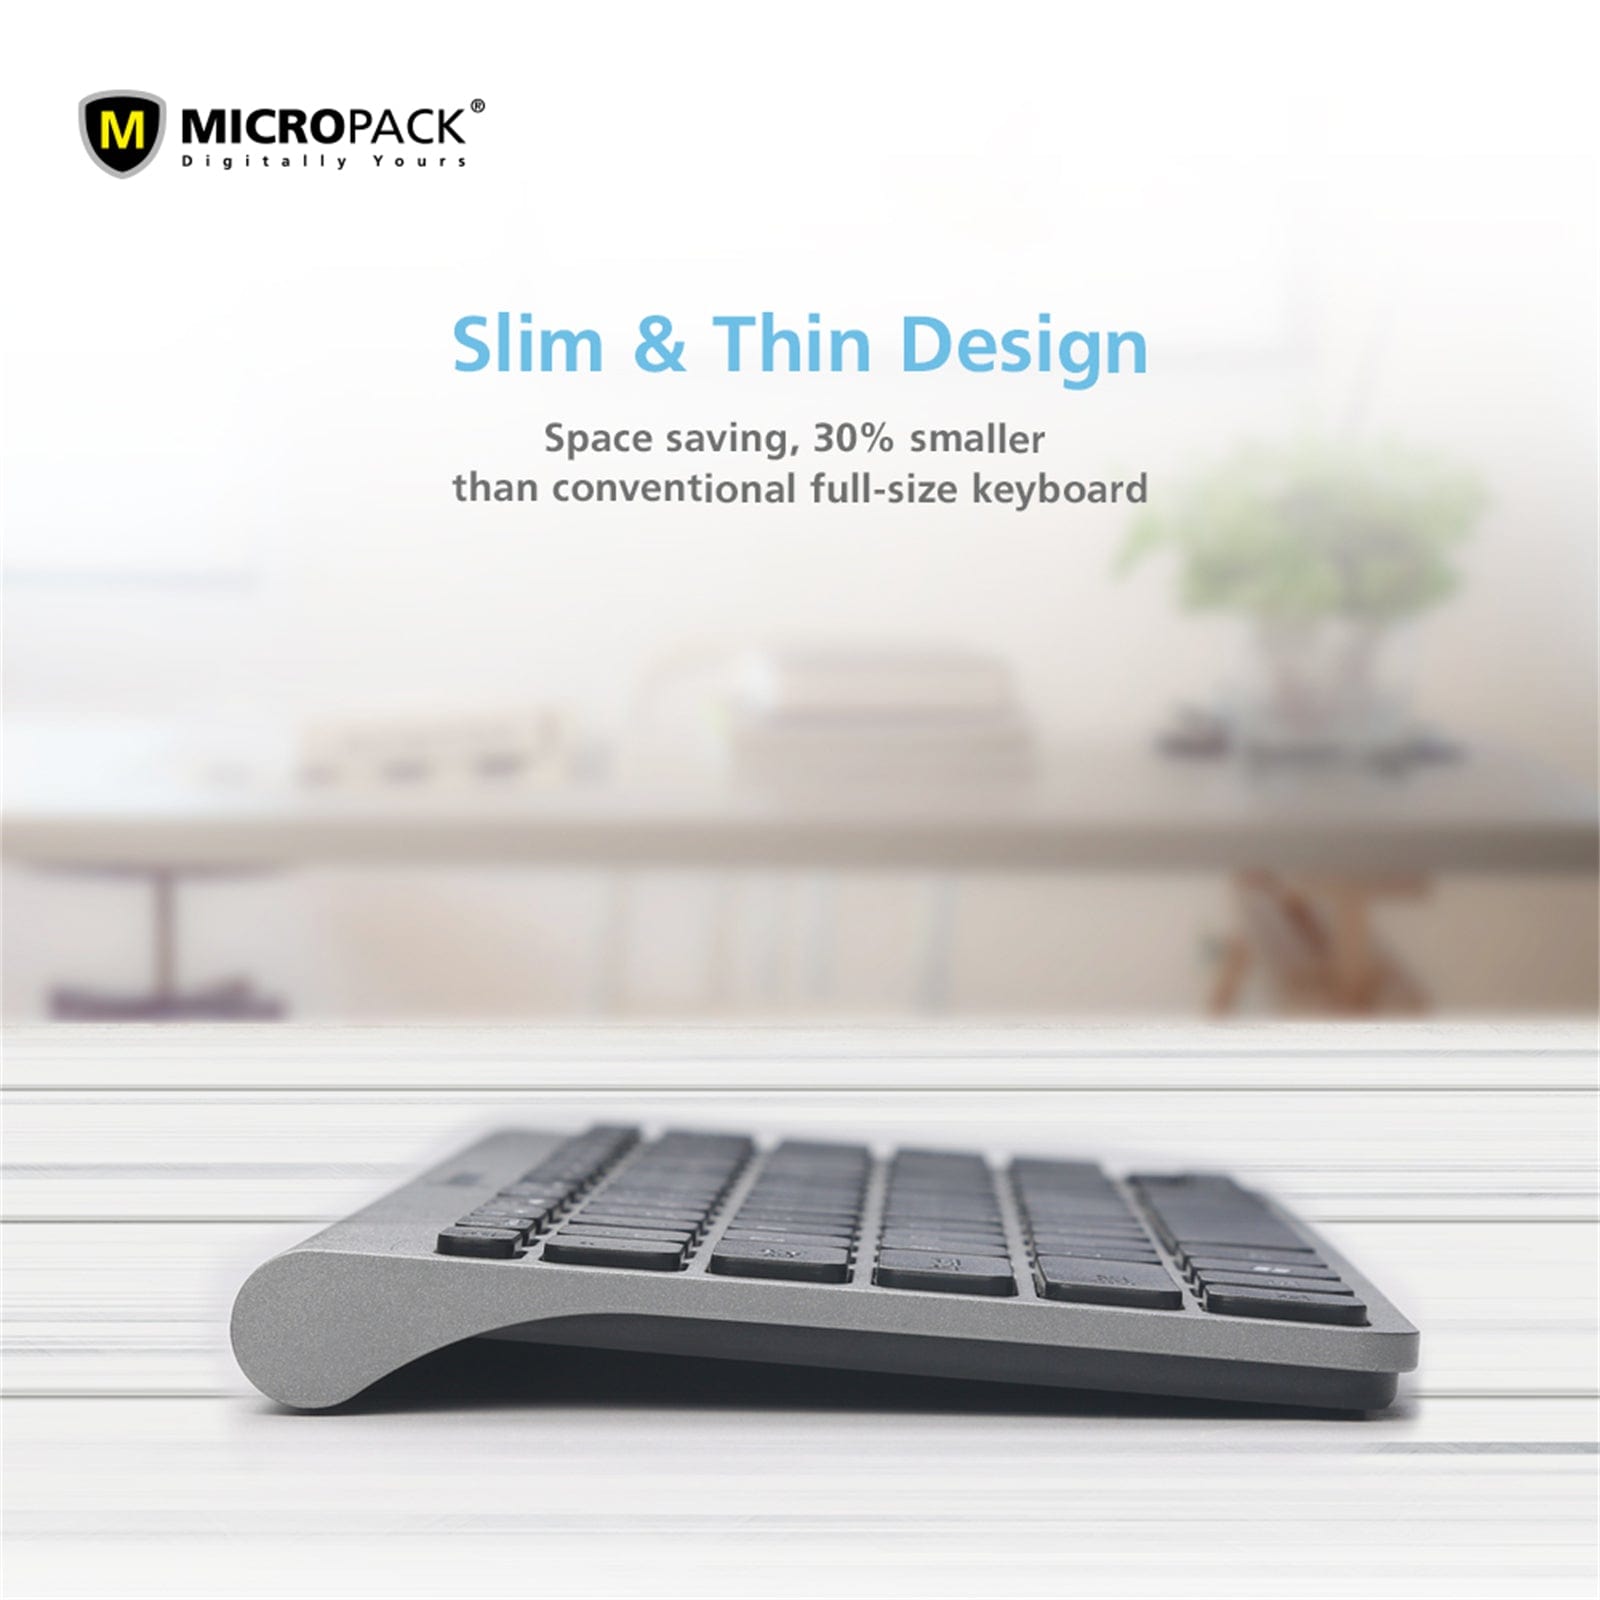 Desktop PC Laptop Wireless Mouse Keyboard Nano Receiver Ultra High Sensitivity